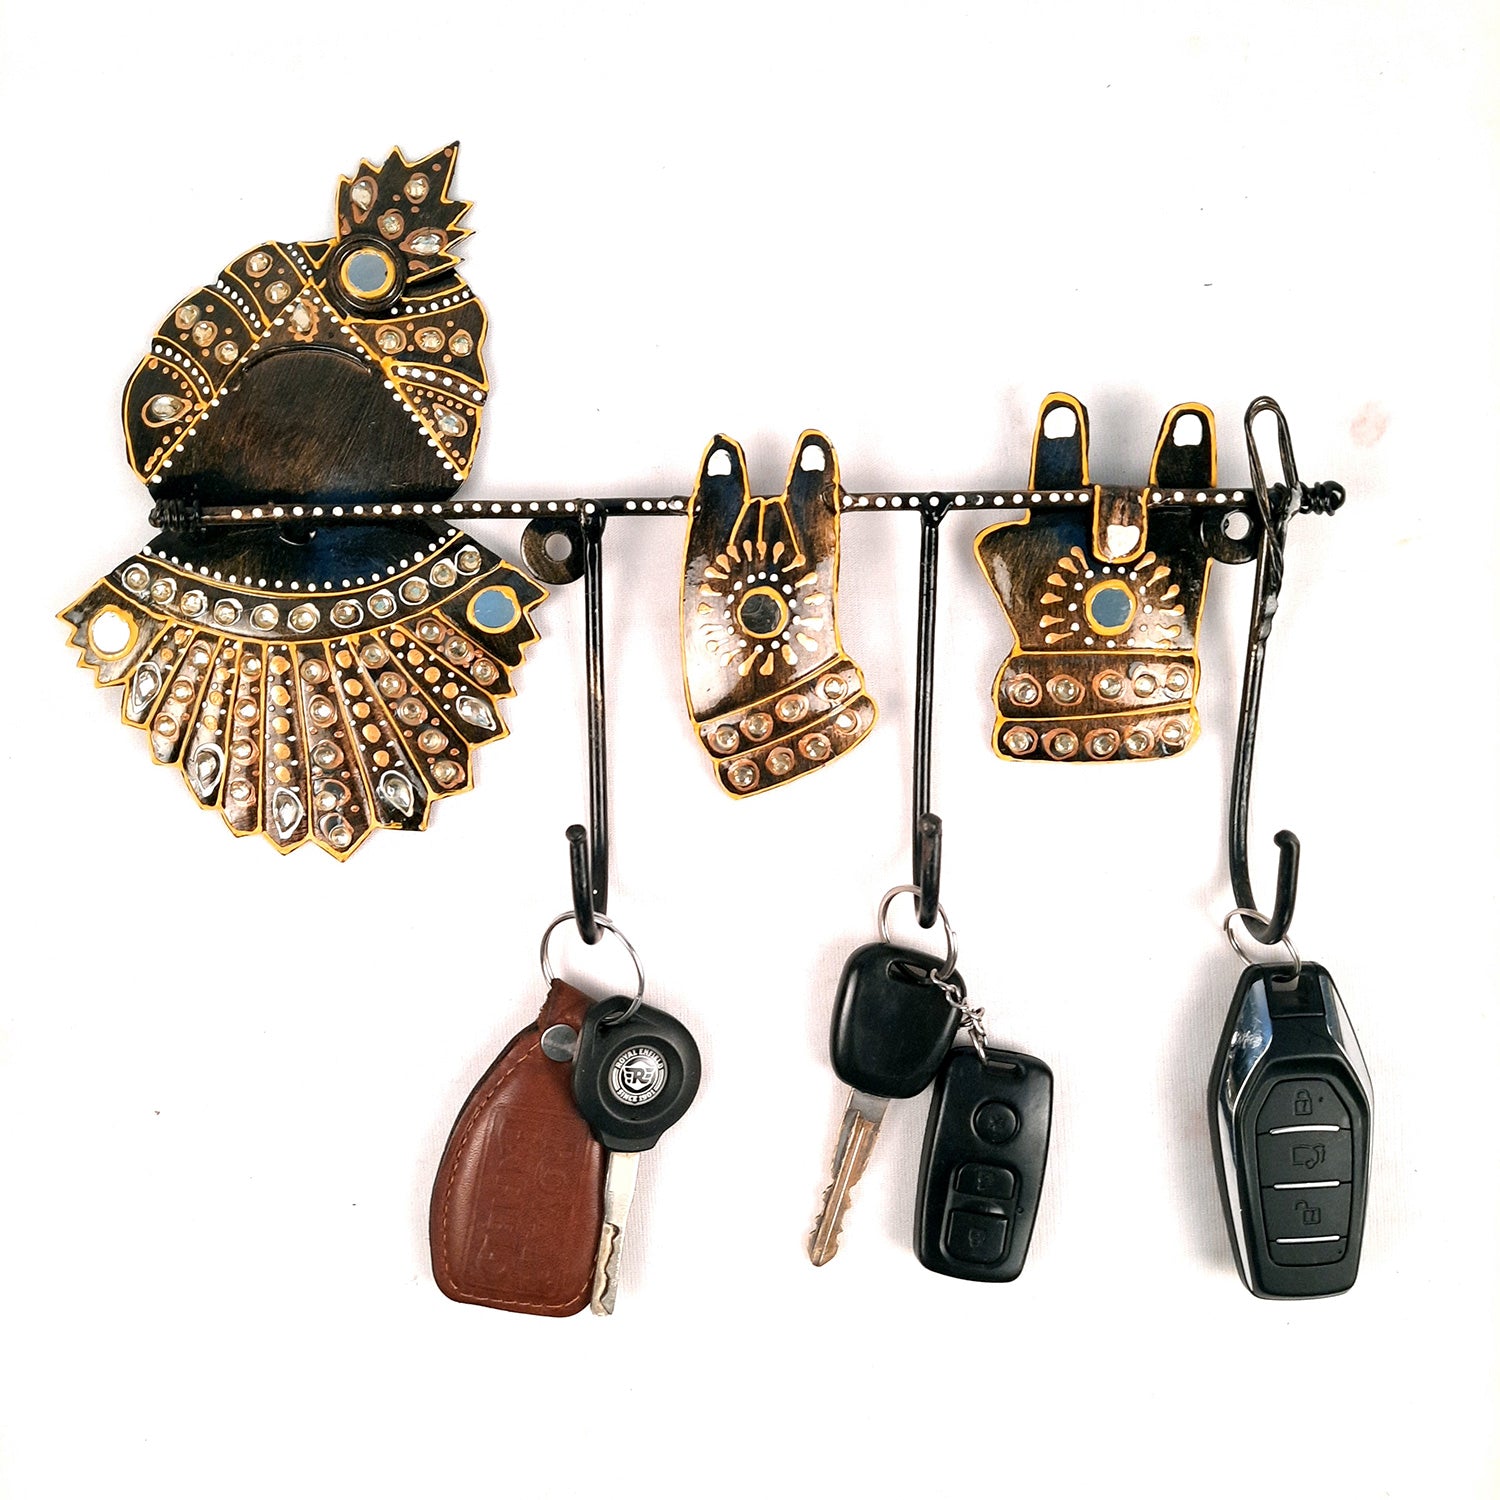 Key Holder Wall Hanging | Key Hook Hanger Stand - Krishna Design | Keys Organizer - For Home, Entrance, Office Decor & Gifts - 12 Inch (3 Hooks)